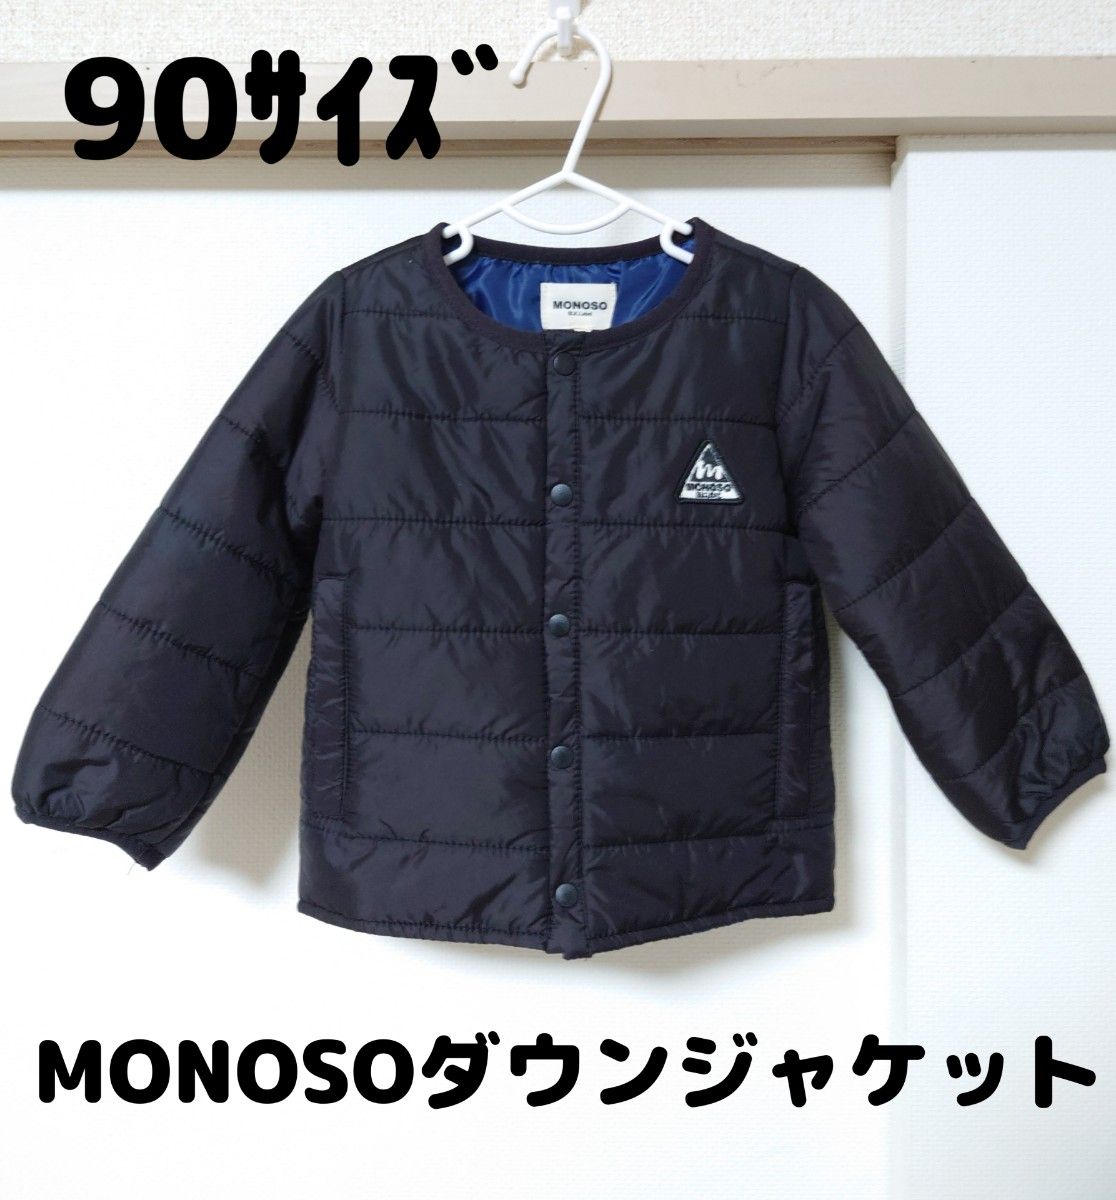 MONOSOダウンジャケット/90サイズ/しまむら/黒